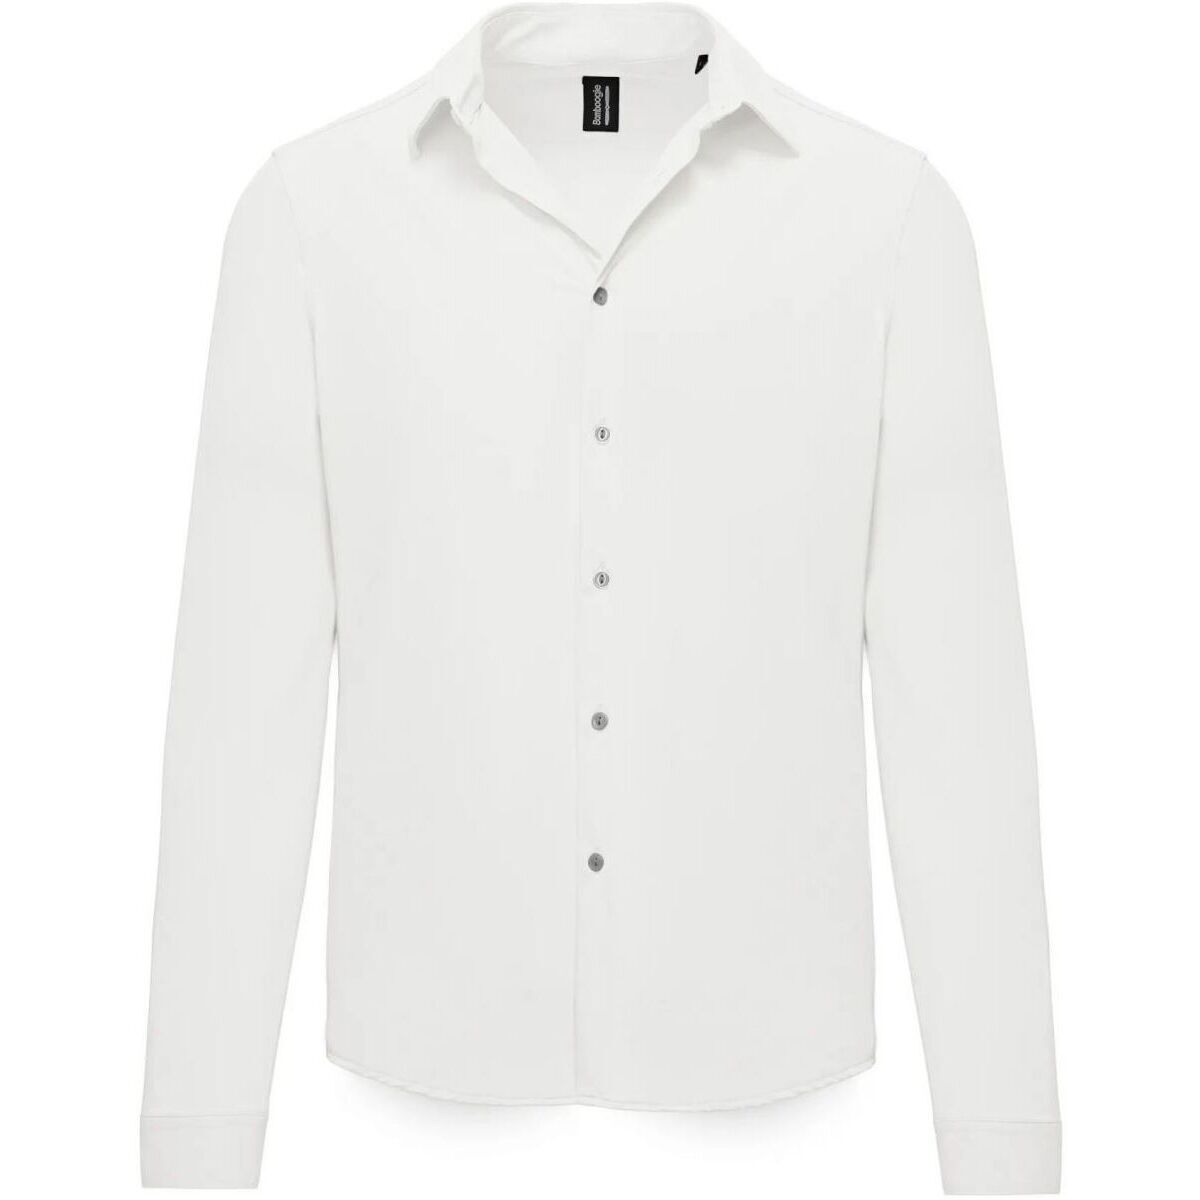 Kleidung Herren Langärmelige Hemden Bomboogie SM8581 TNP4-00 OPTIC WHITE Weiss